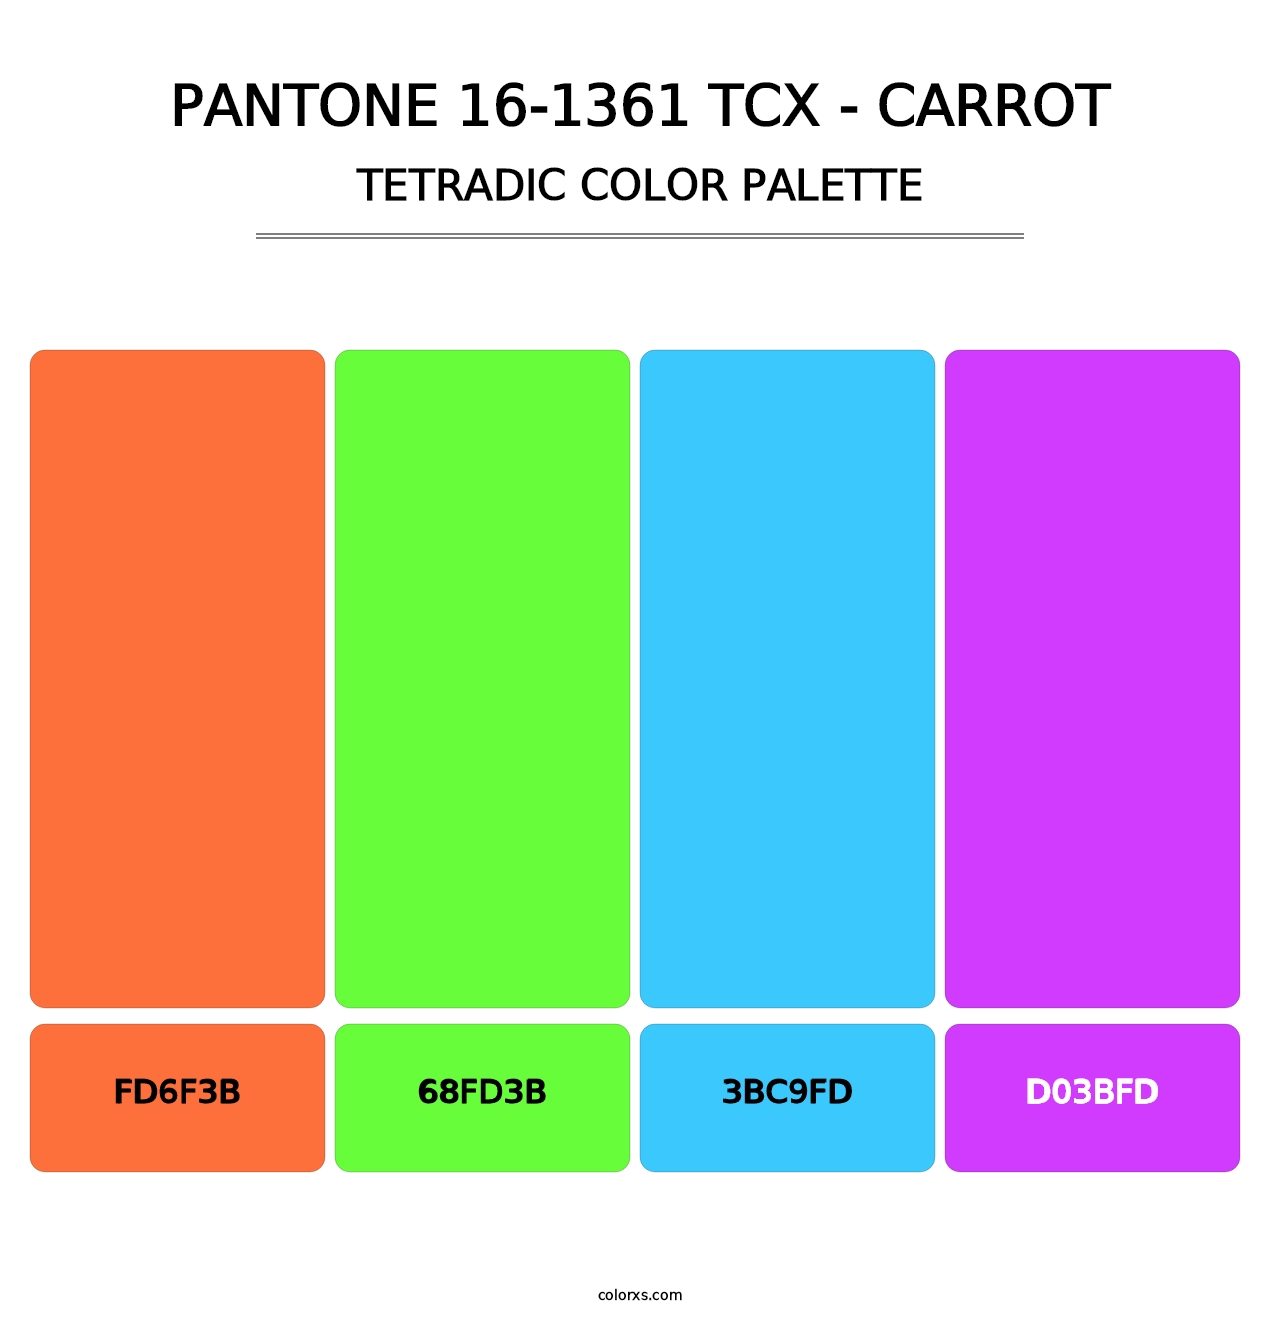 PANTONE 16-1361 TCX - Carrot - Tetradic Color Palette